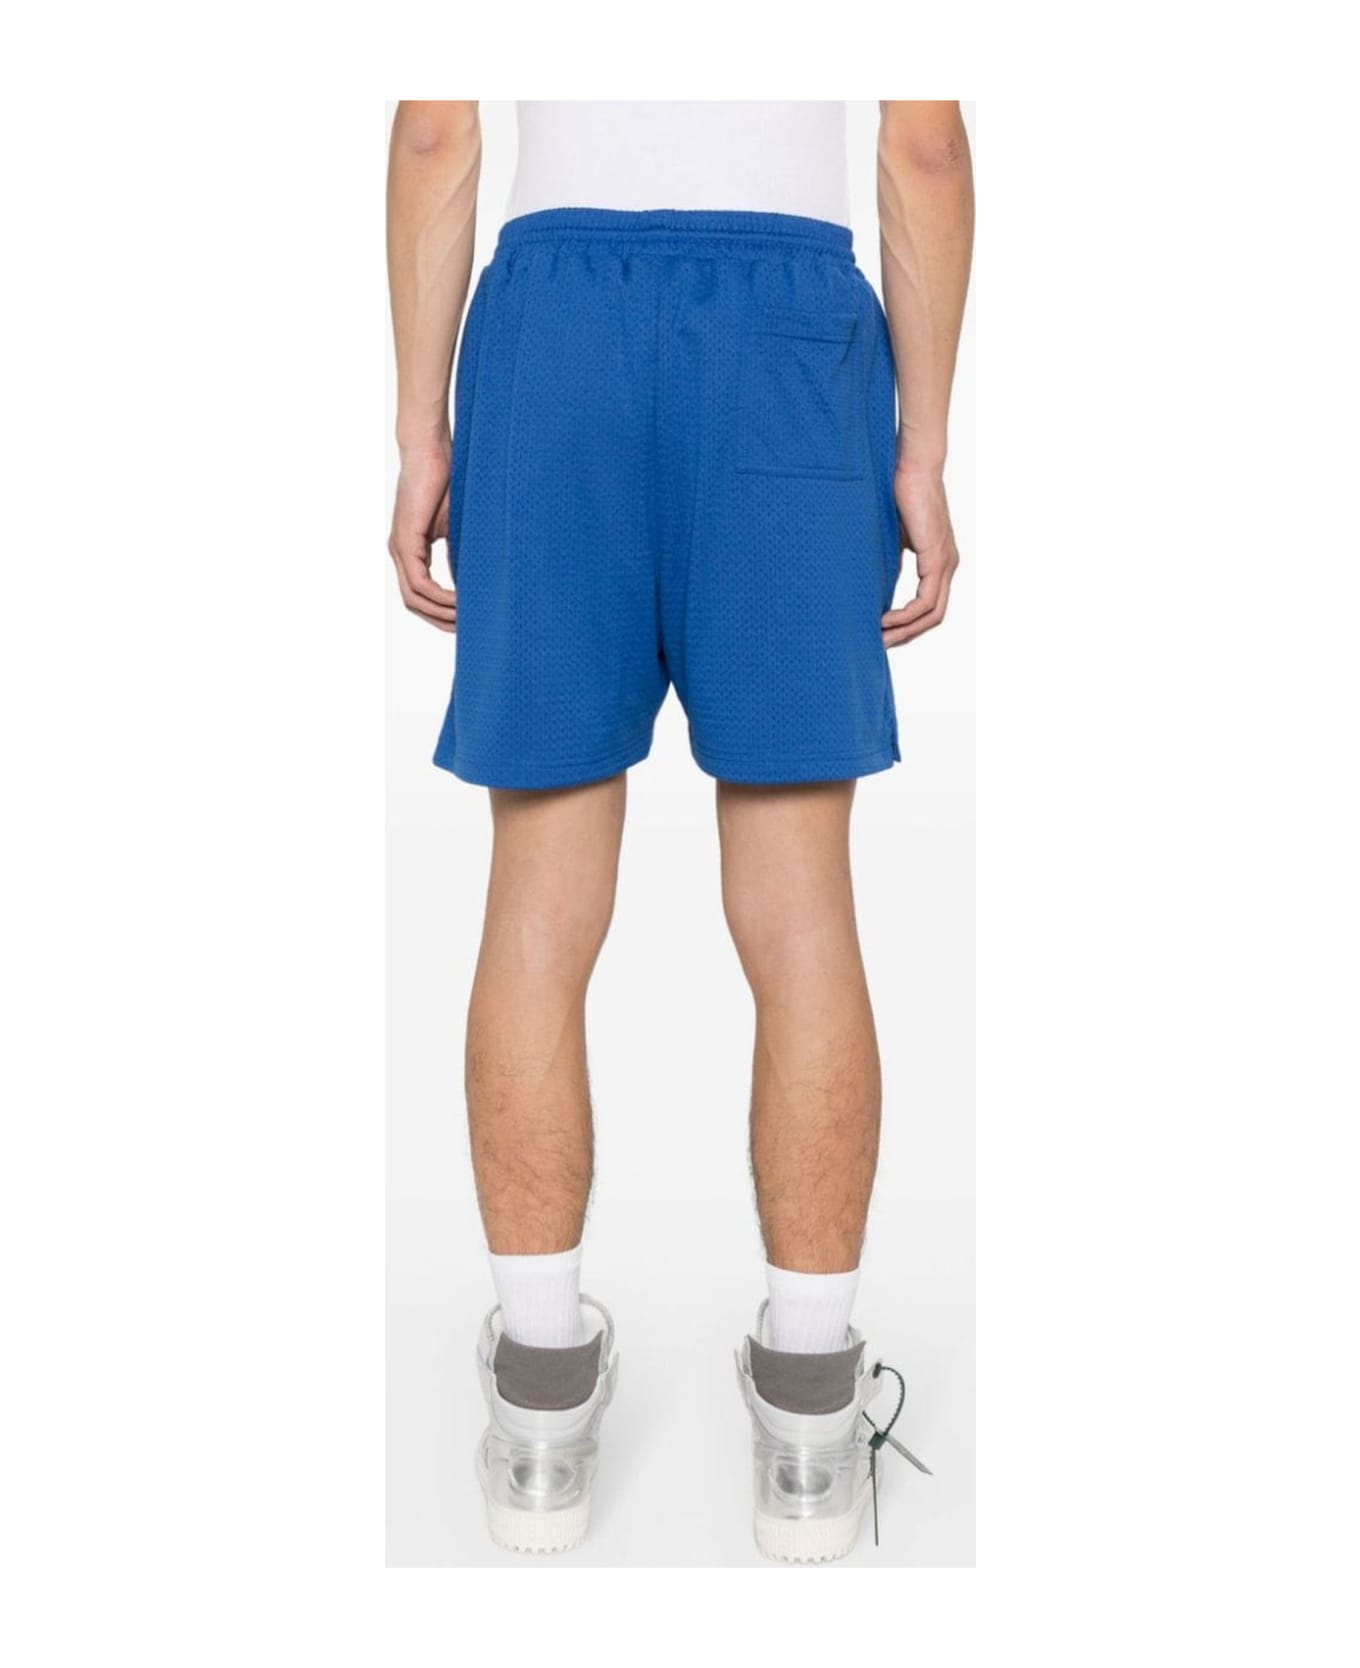 REPRESENT Blue Shorts Shorts - COBALT BLUE